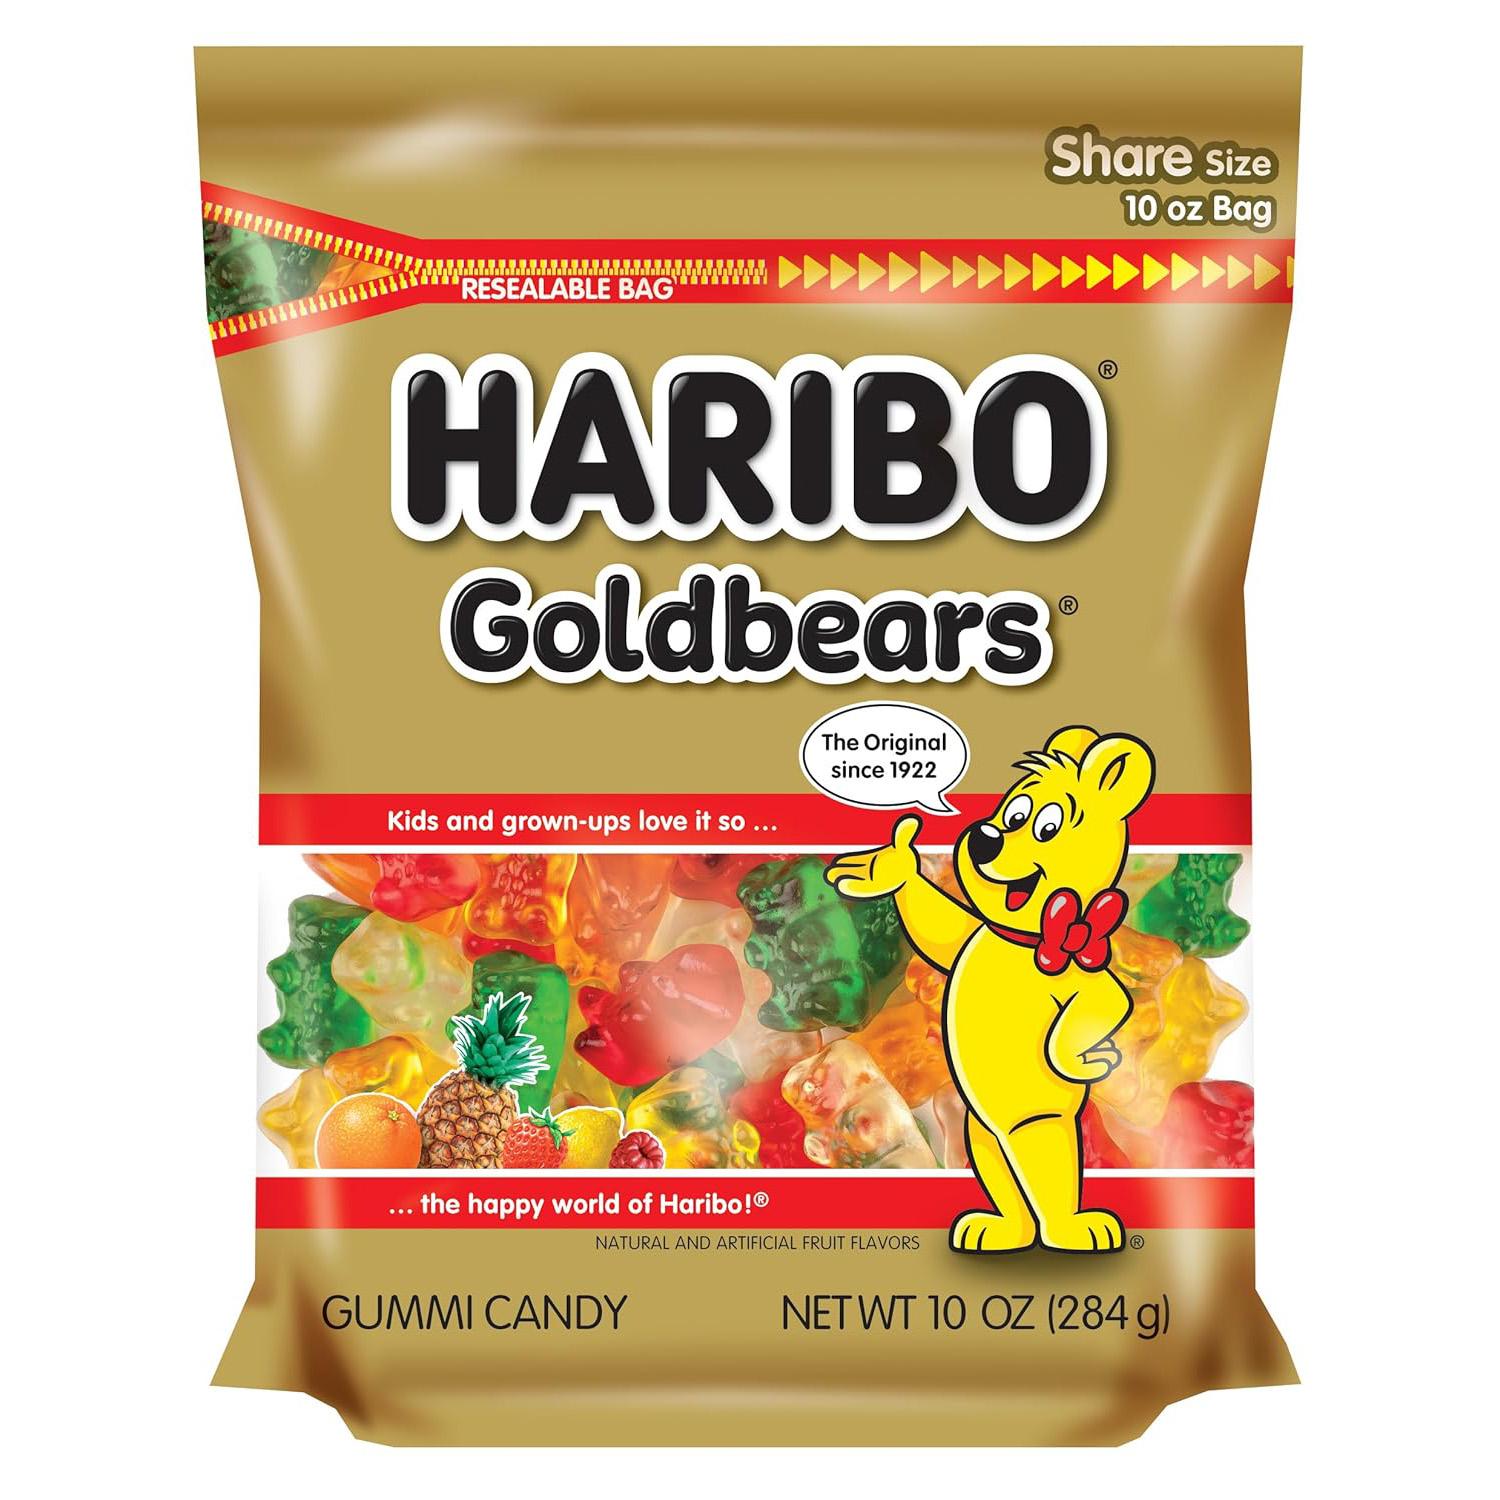 Haribo Goldbears Gummi Candy Resealable Bag for $2.06 Shipped